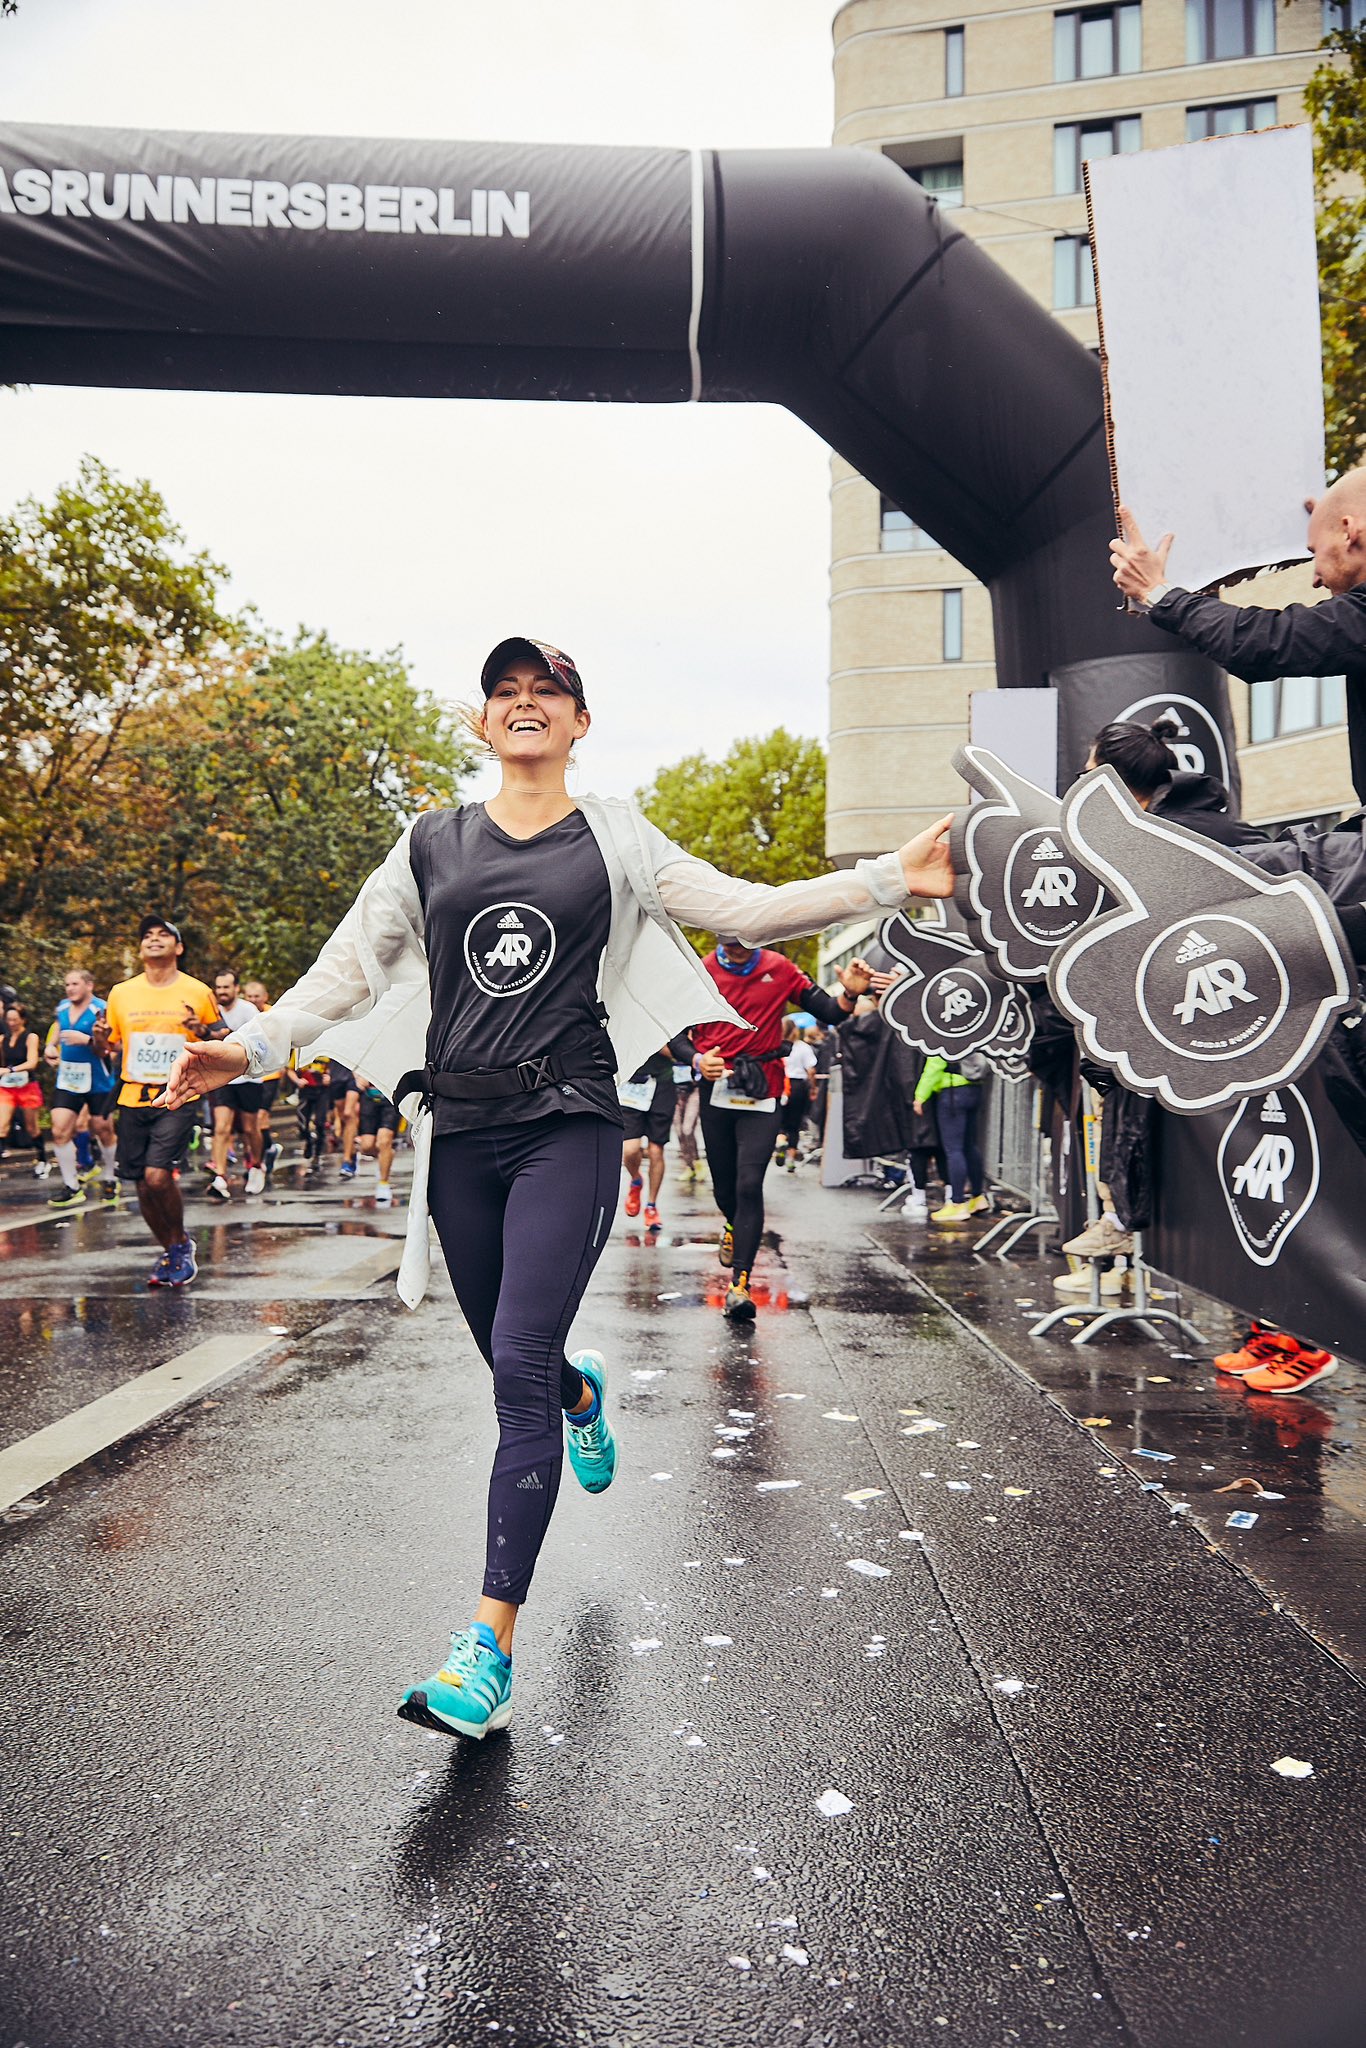 Restricción mudo cerca adidas Running on Twitter: "👟45,000 runners 🌍150 nations 😅42 kilometers  🇩🇪One incredible city Berlin Marathon 2022: who's with us?  #berlinmarathon https://t.co/LwbqHJqtaK" / Twitter